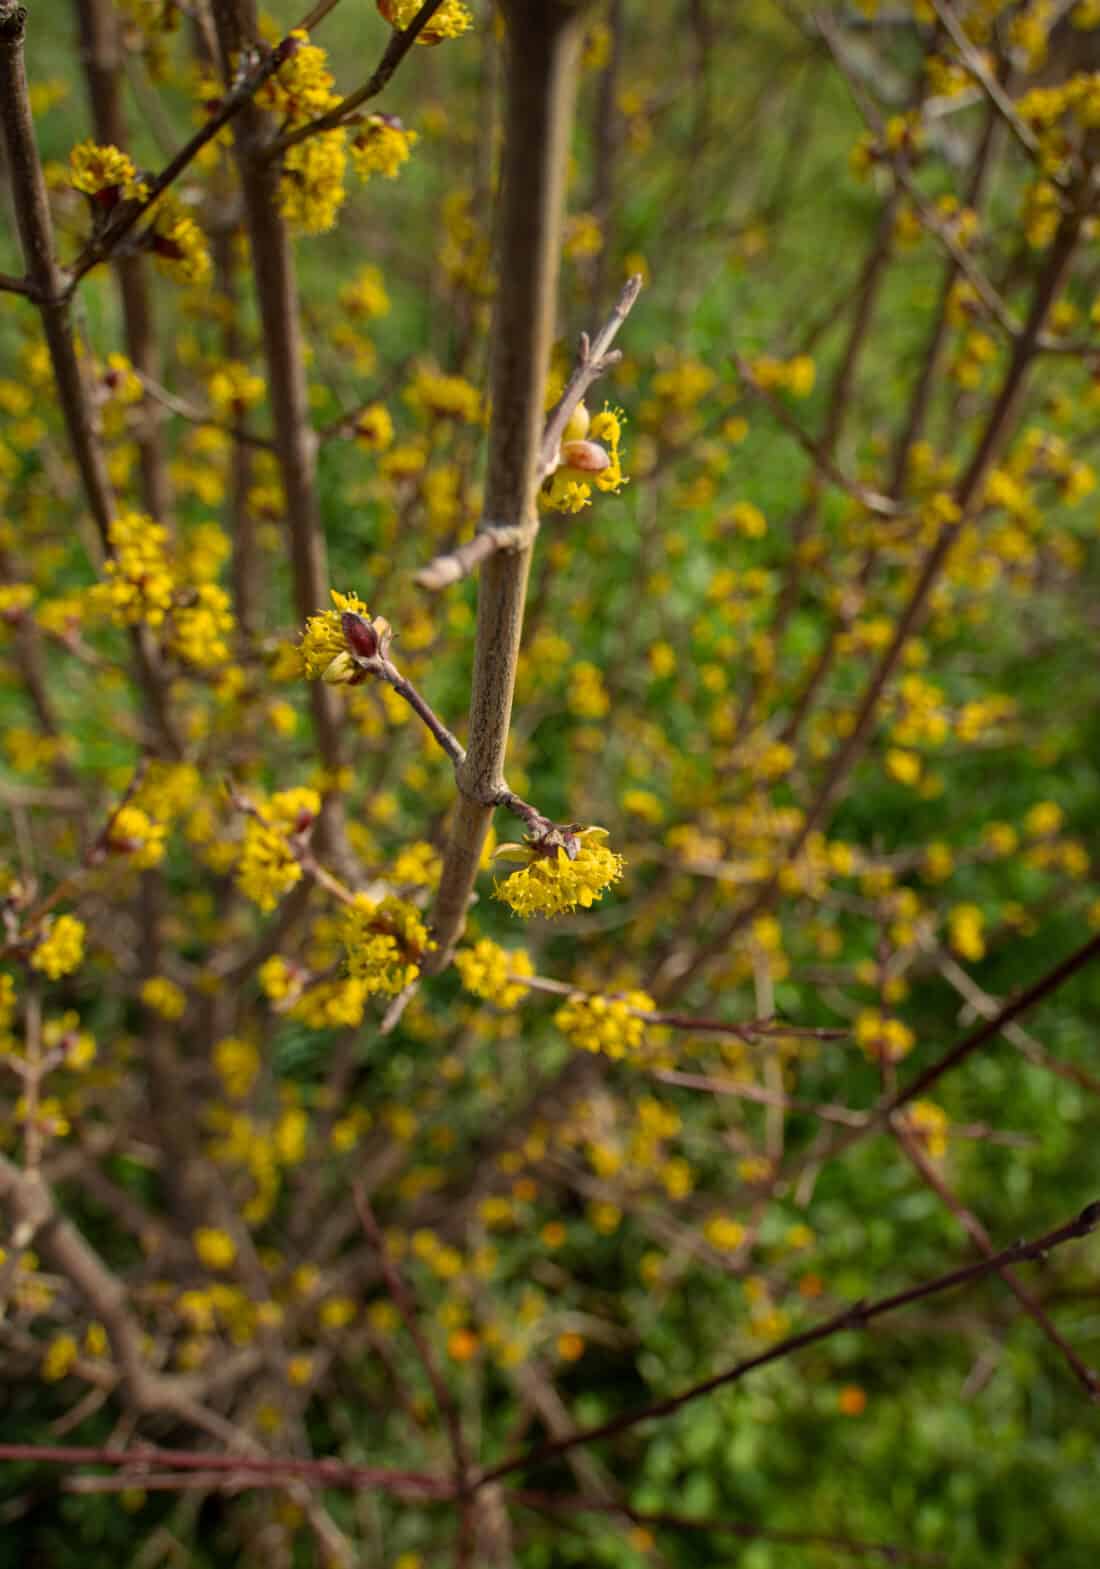 A close up of yellow flowers on a Cornus Mas tree.